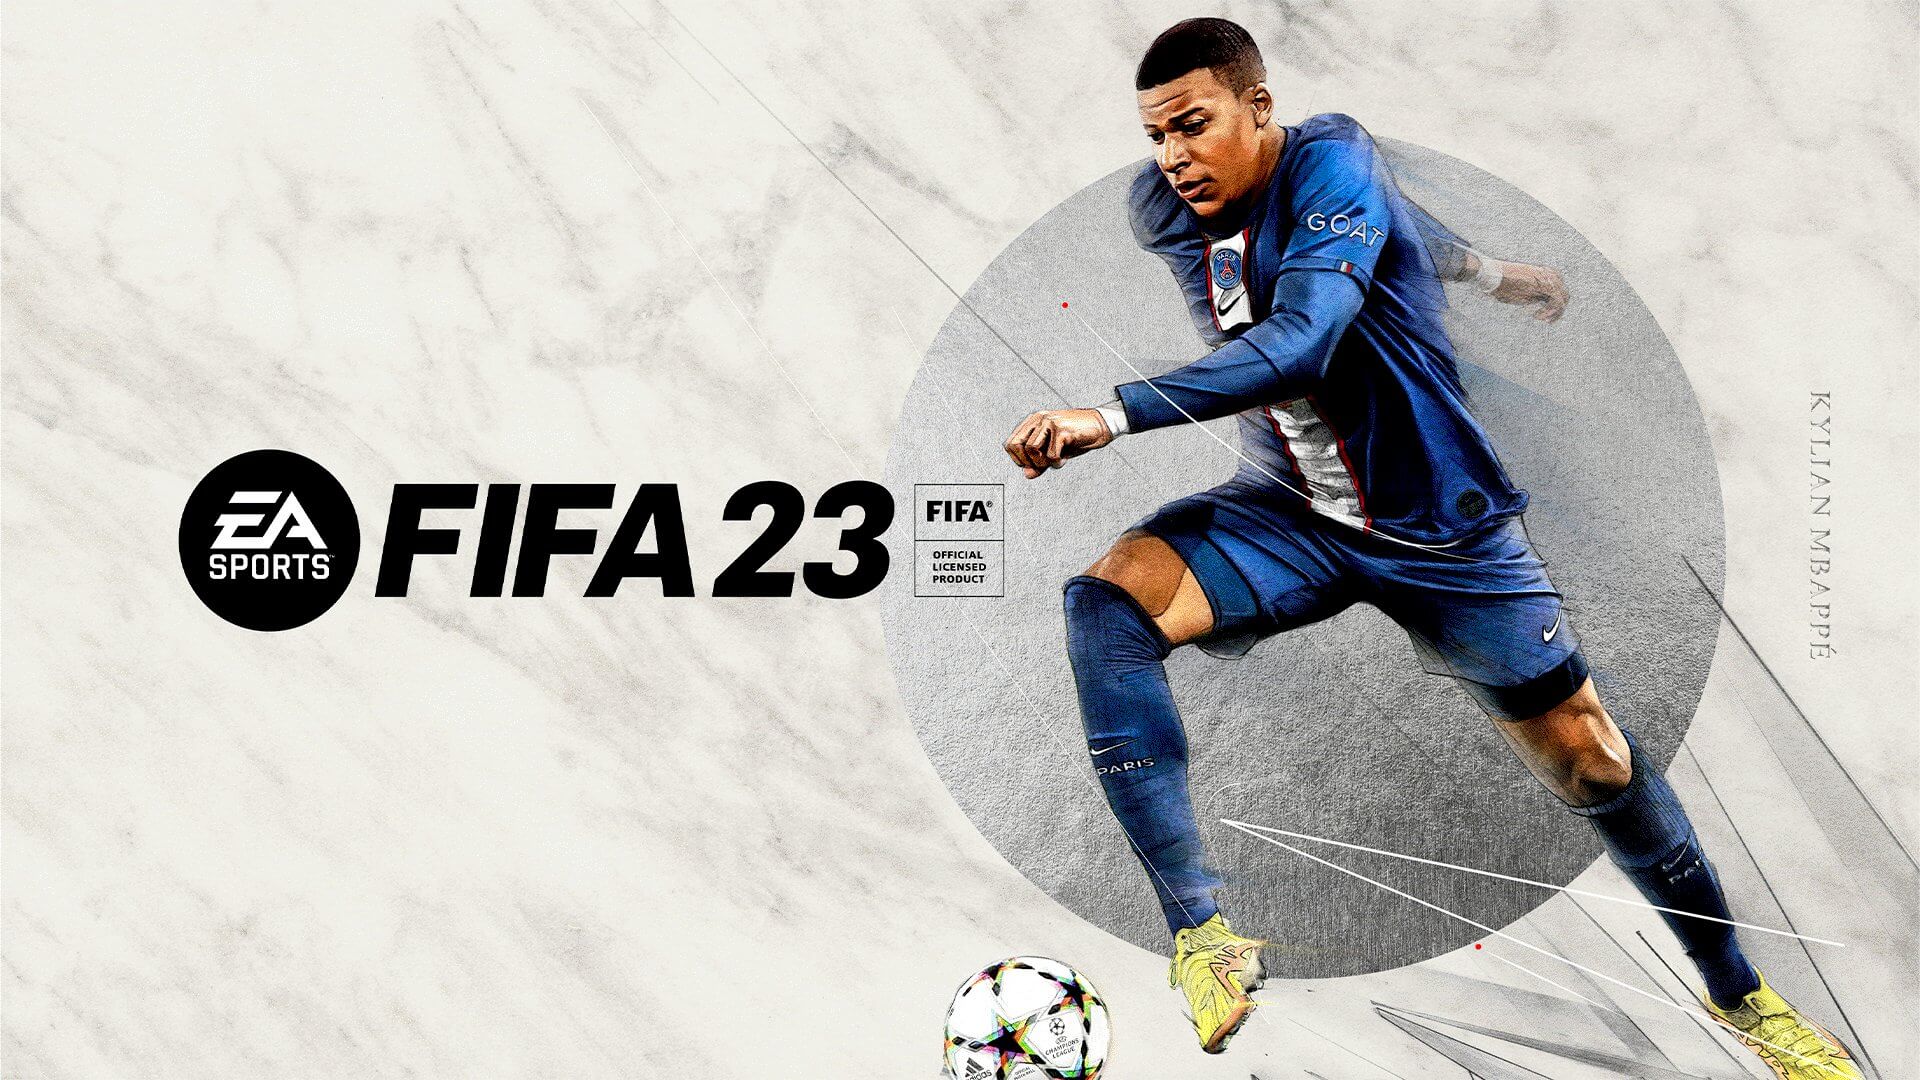 Qu'attendre du jeu FIFA 23 ?